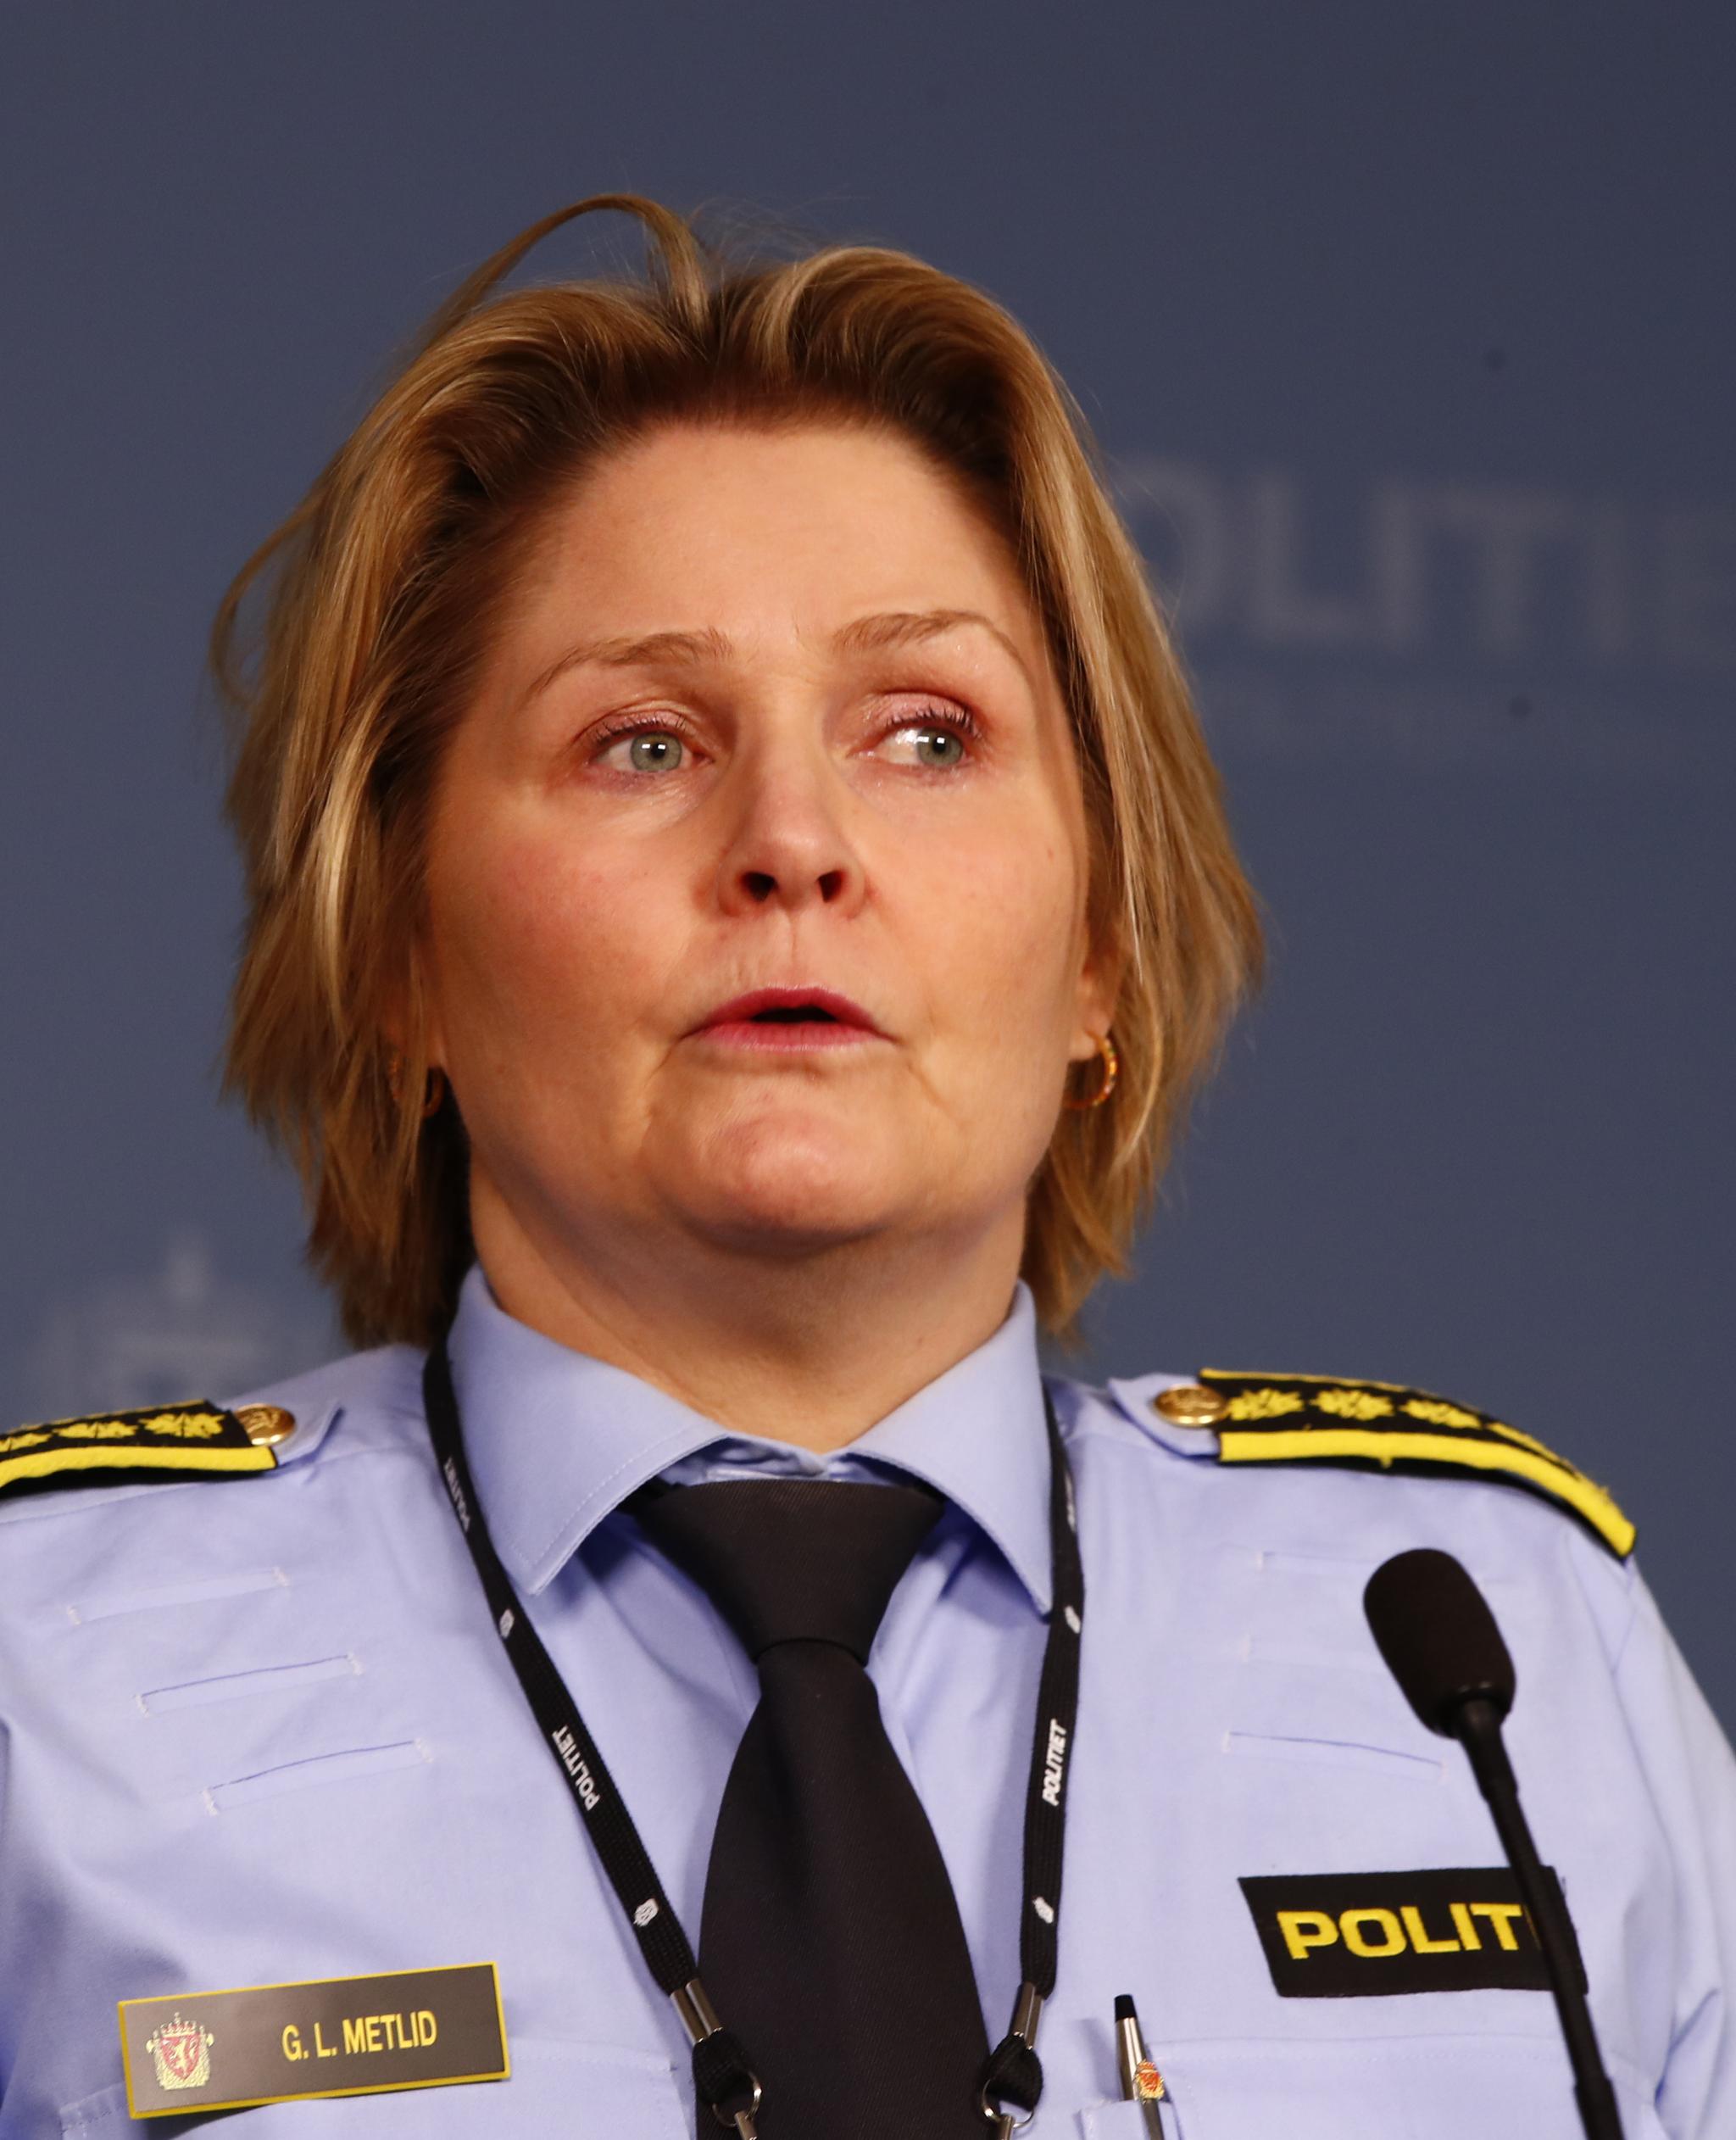 Politiinspektør Grete Lien Metlid under lørdagens pressekonferanse.